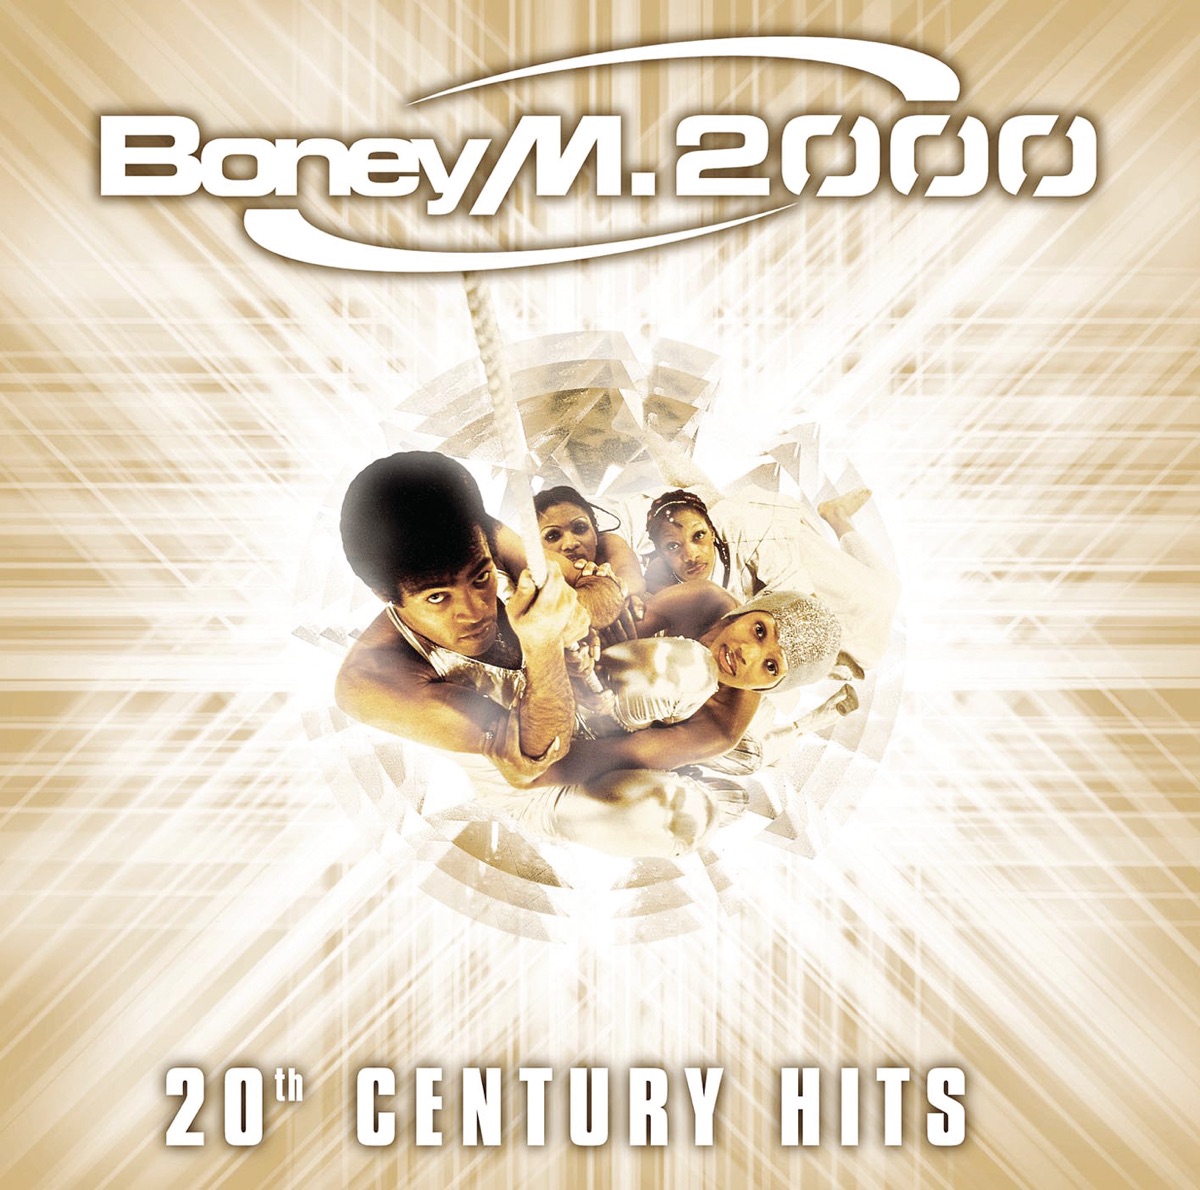 20th Century Hits by Boney M. 2000 on Apple Music